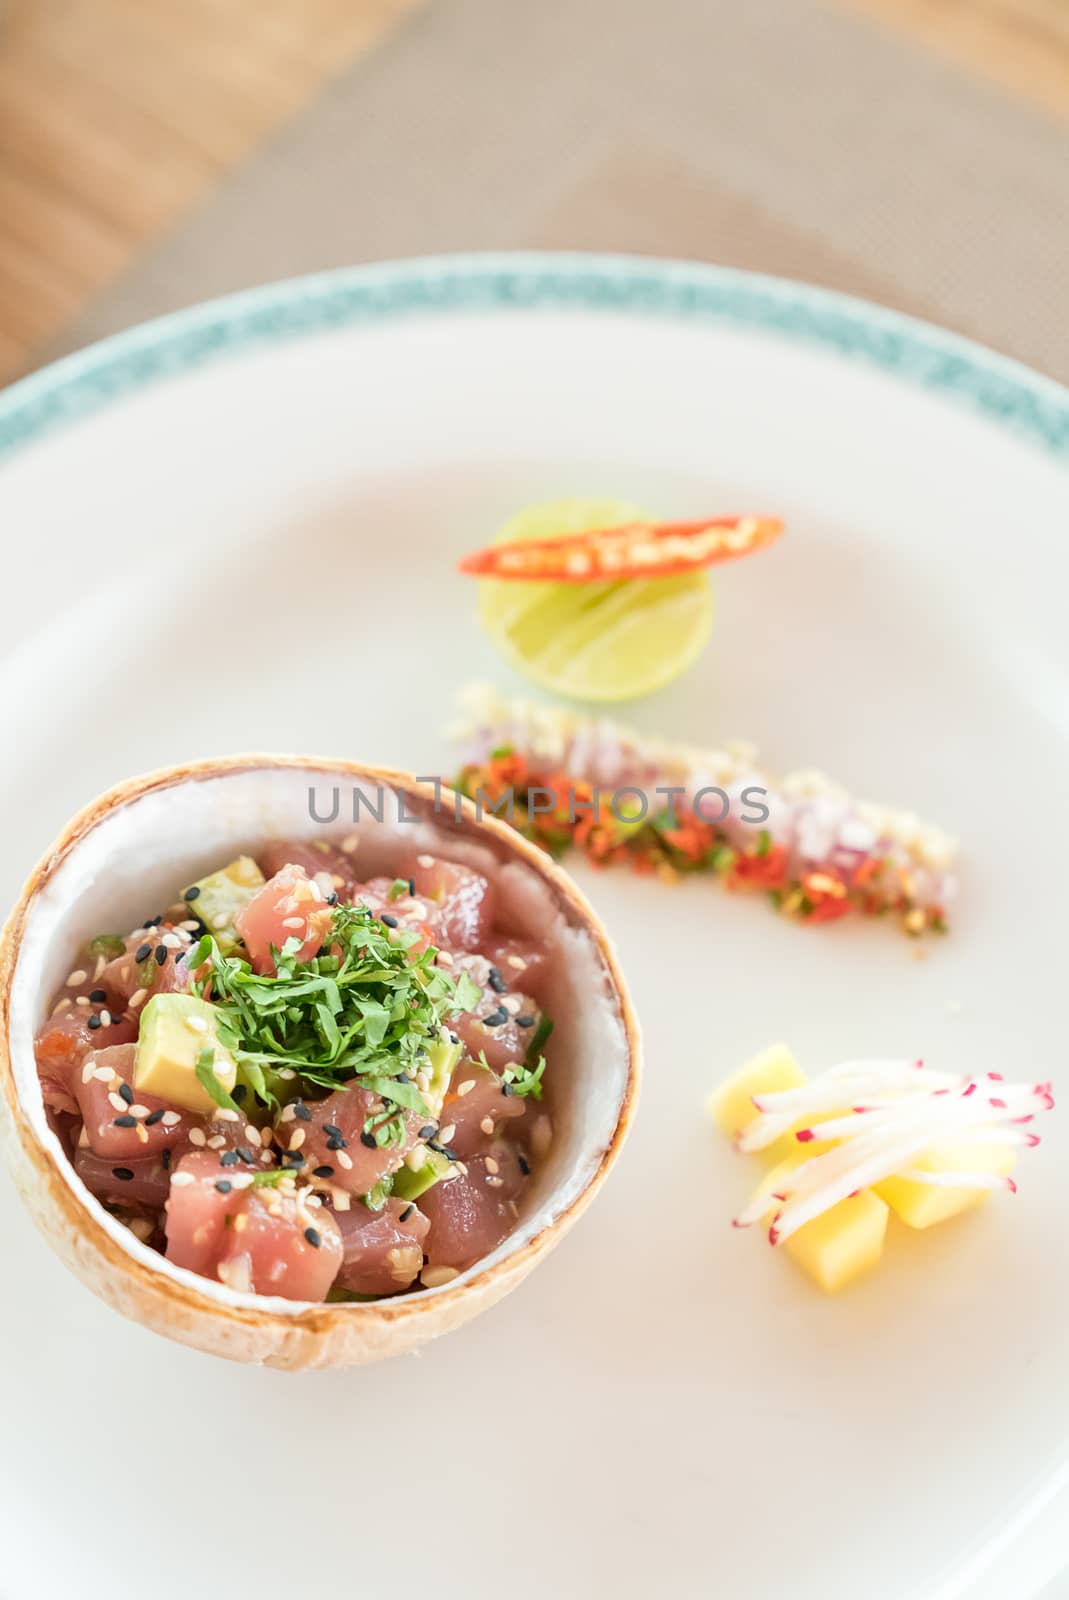 spicy tuna salad by vichie81